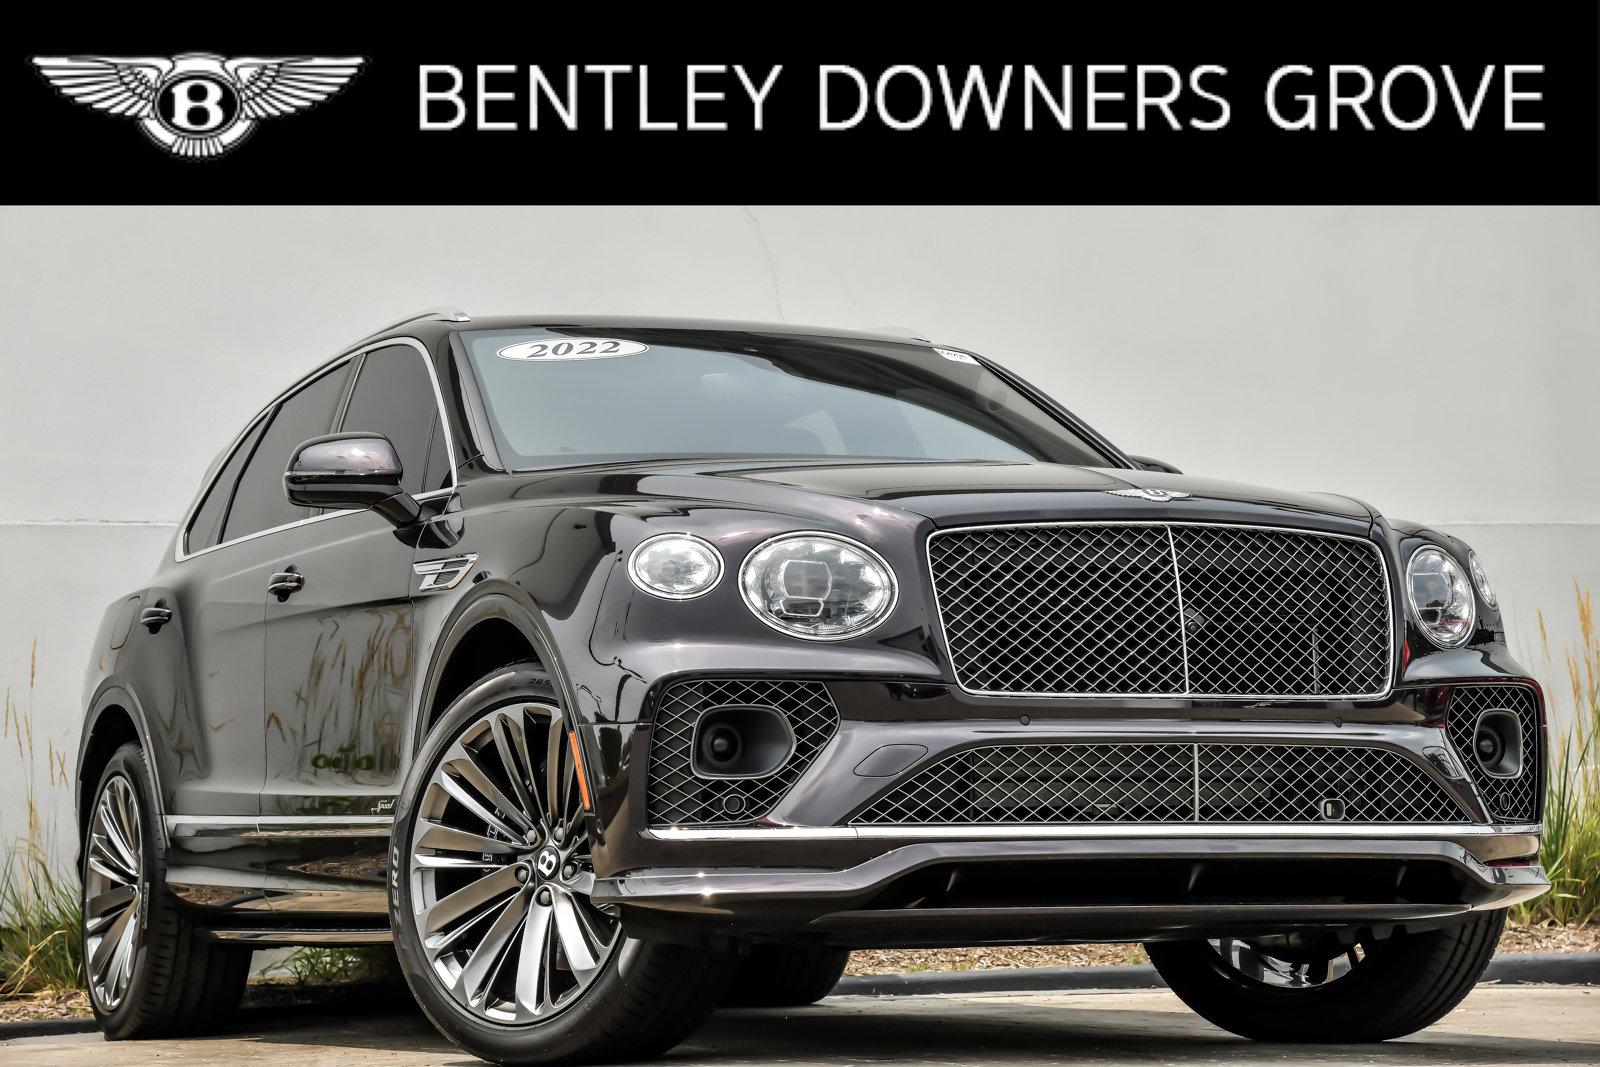 Used 2022 Bentley Bentayga Speed For Sale (Sold) | Bentley Downers 